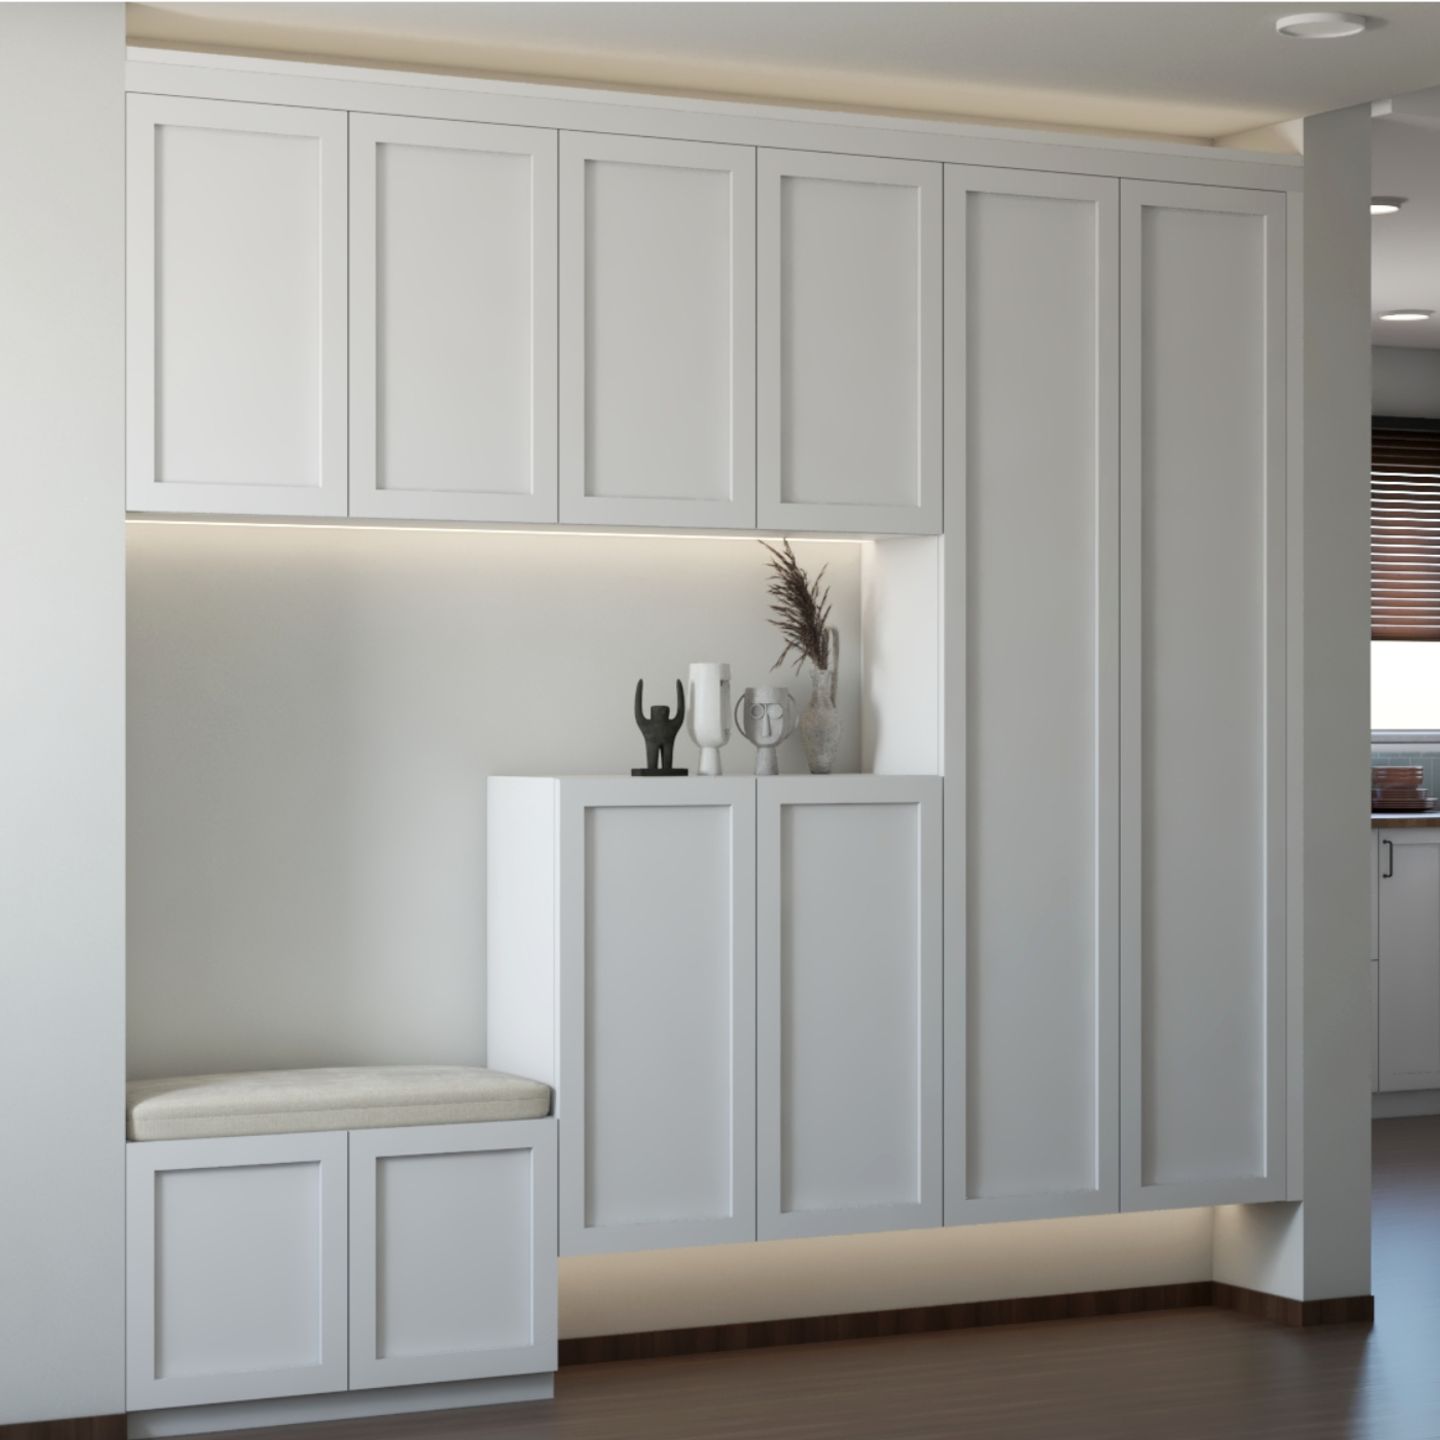 Moisture-Resistant White Laminate Design For Cabinets - Livspace